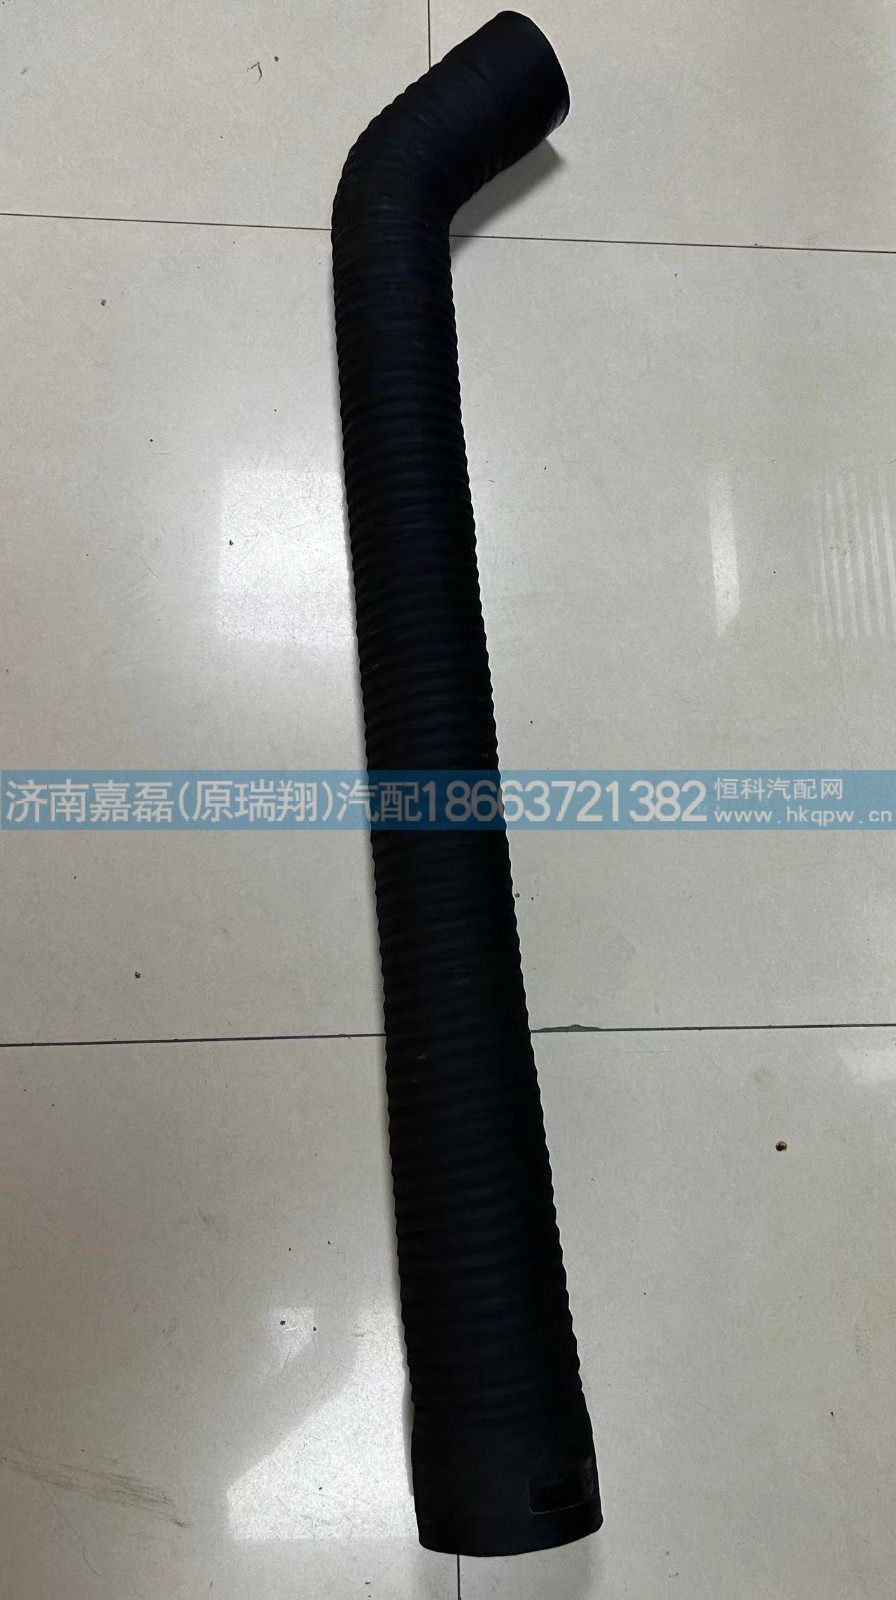 WG9770190003,出气管,济南嘉磊汽车配件有限公司(原济南瑞翔)